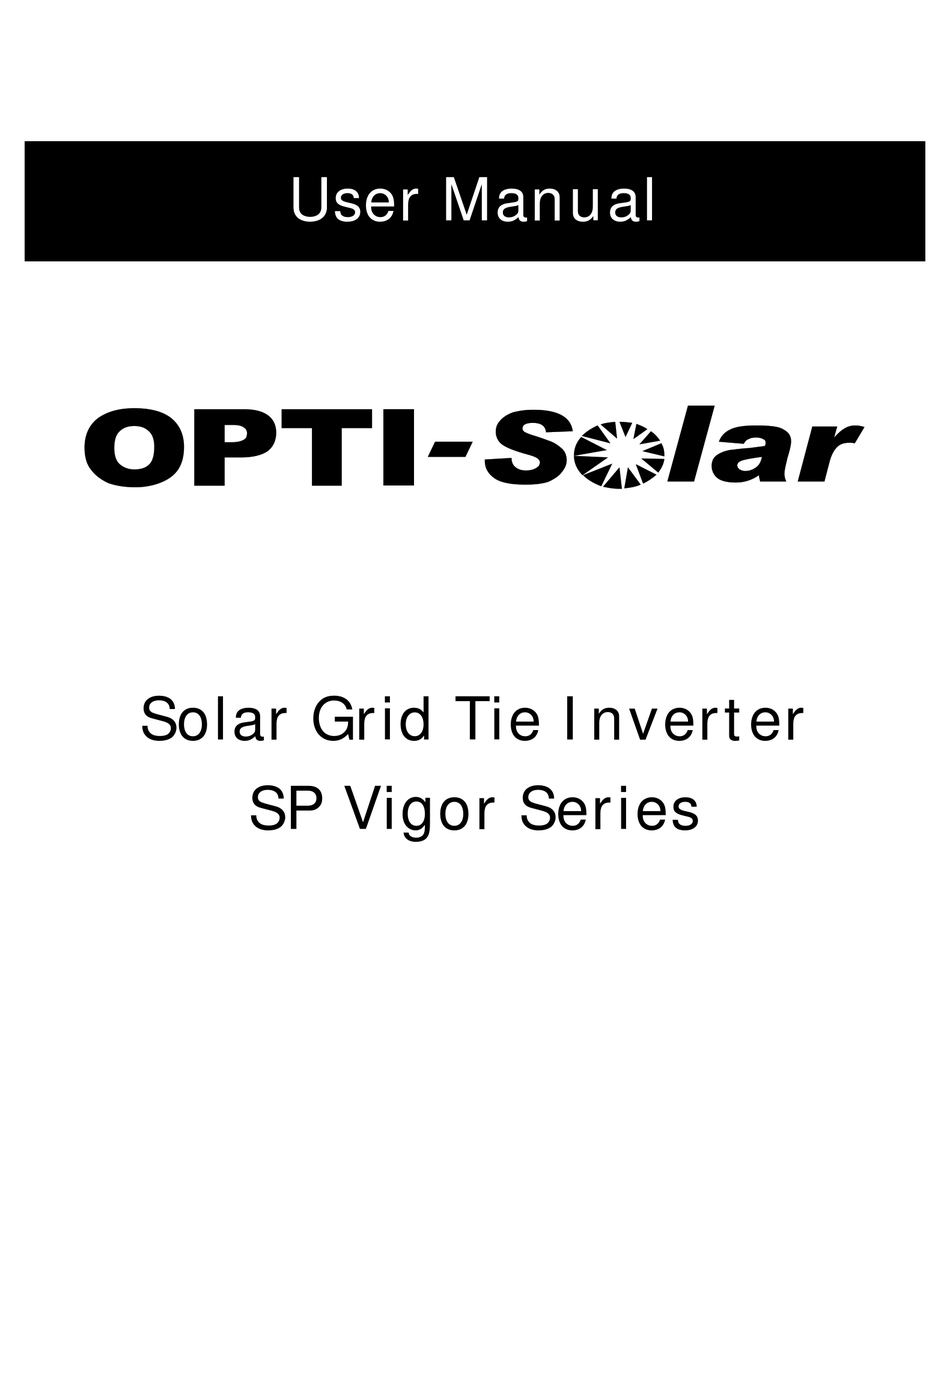 PDF user manual for hybrid solar PV 3KVA inverter MPPT charger from OPTI SOLAR 